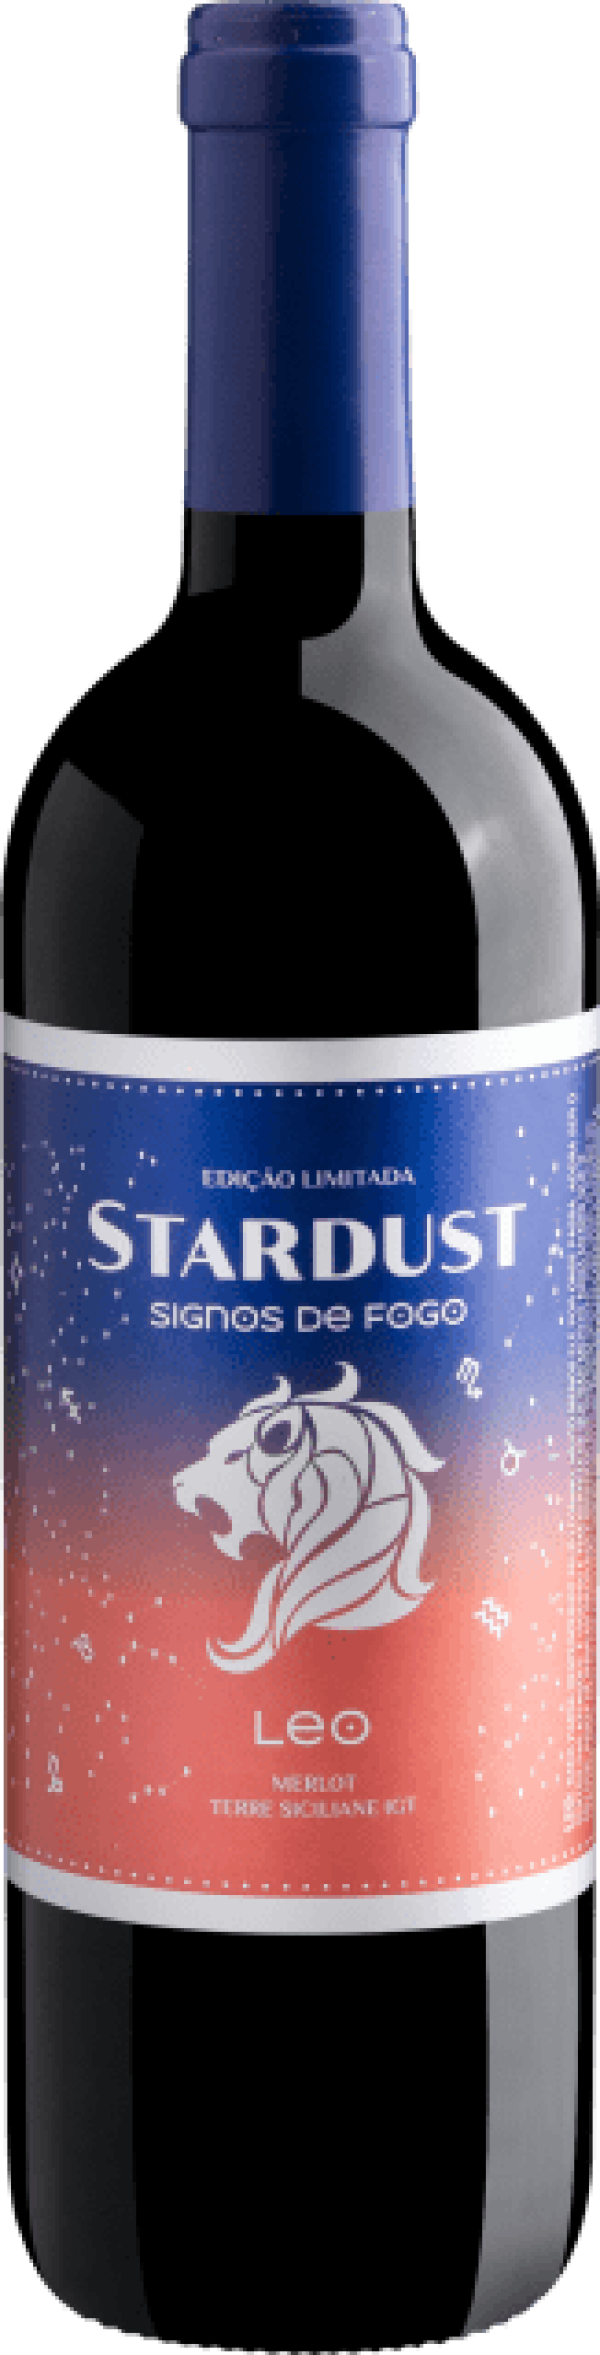 Stardust Edição Limitada Leo Merlot Terre Siciliane IGT 2020